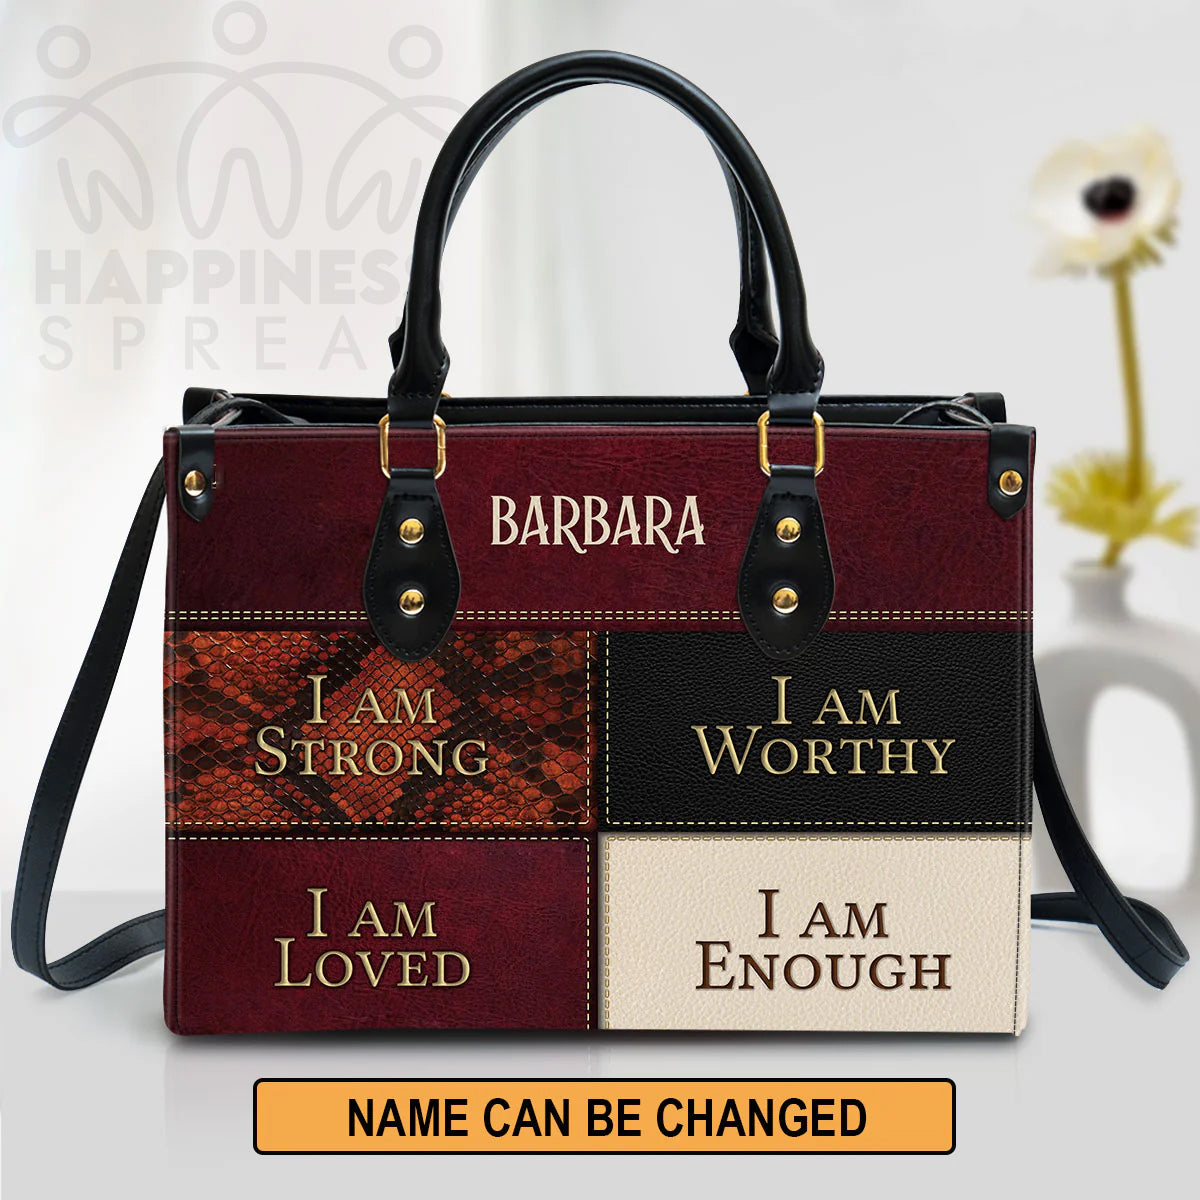 Christianart Handbag, Personalized Hand Bag, I Am Strong I Am Worthy I Am Loved I Am Enough, Personalized Gifts, Gifts for Women. - Christian Art Bag